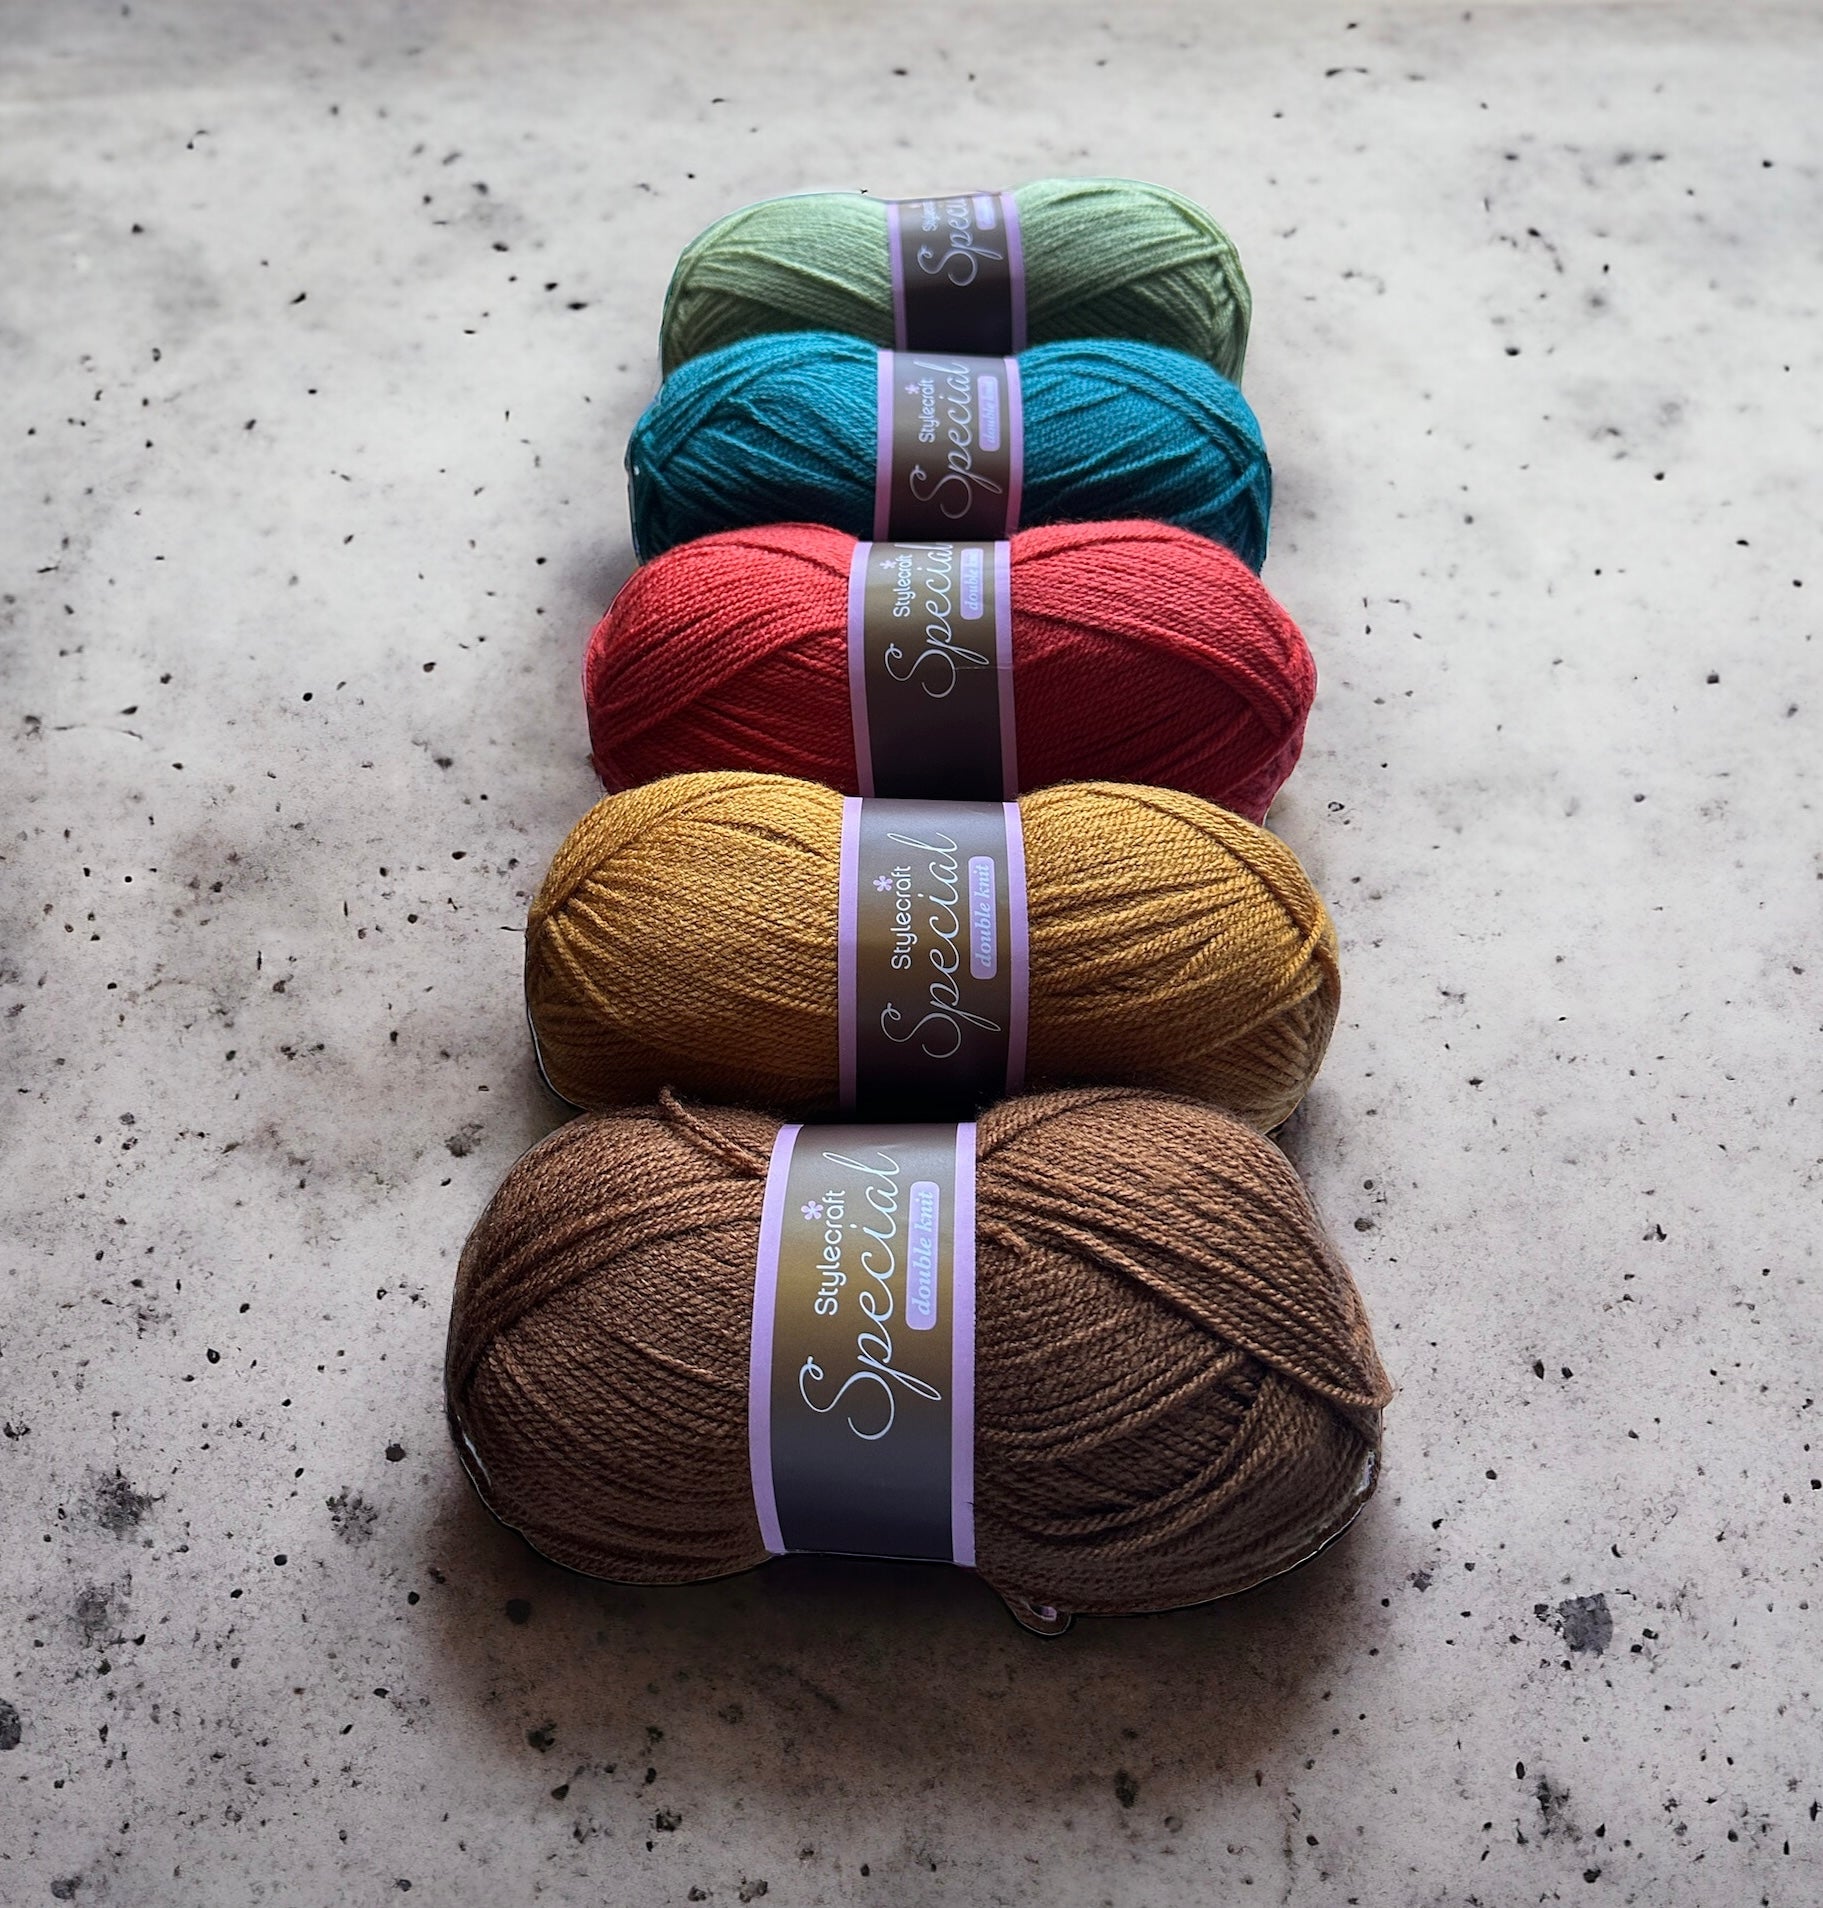 Stylecraft Special DK - Earthy Tones yarn pack